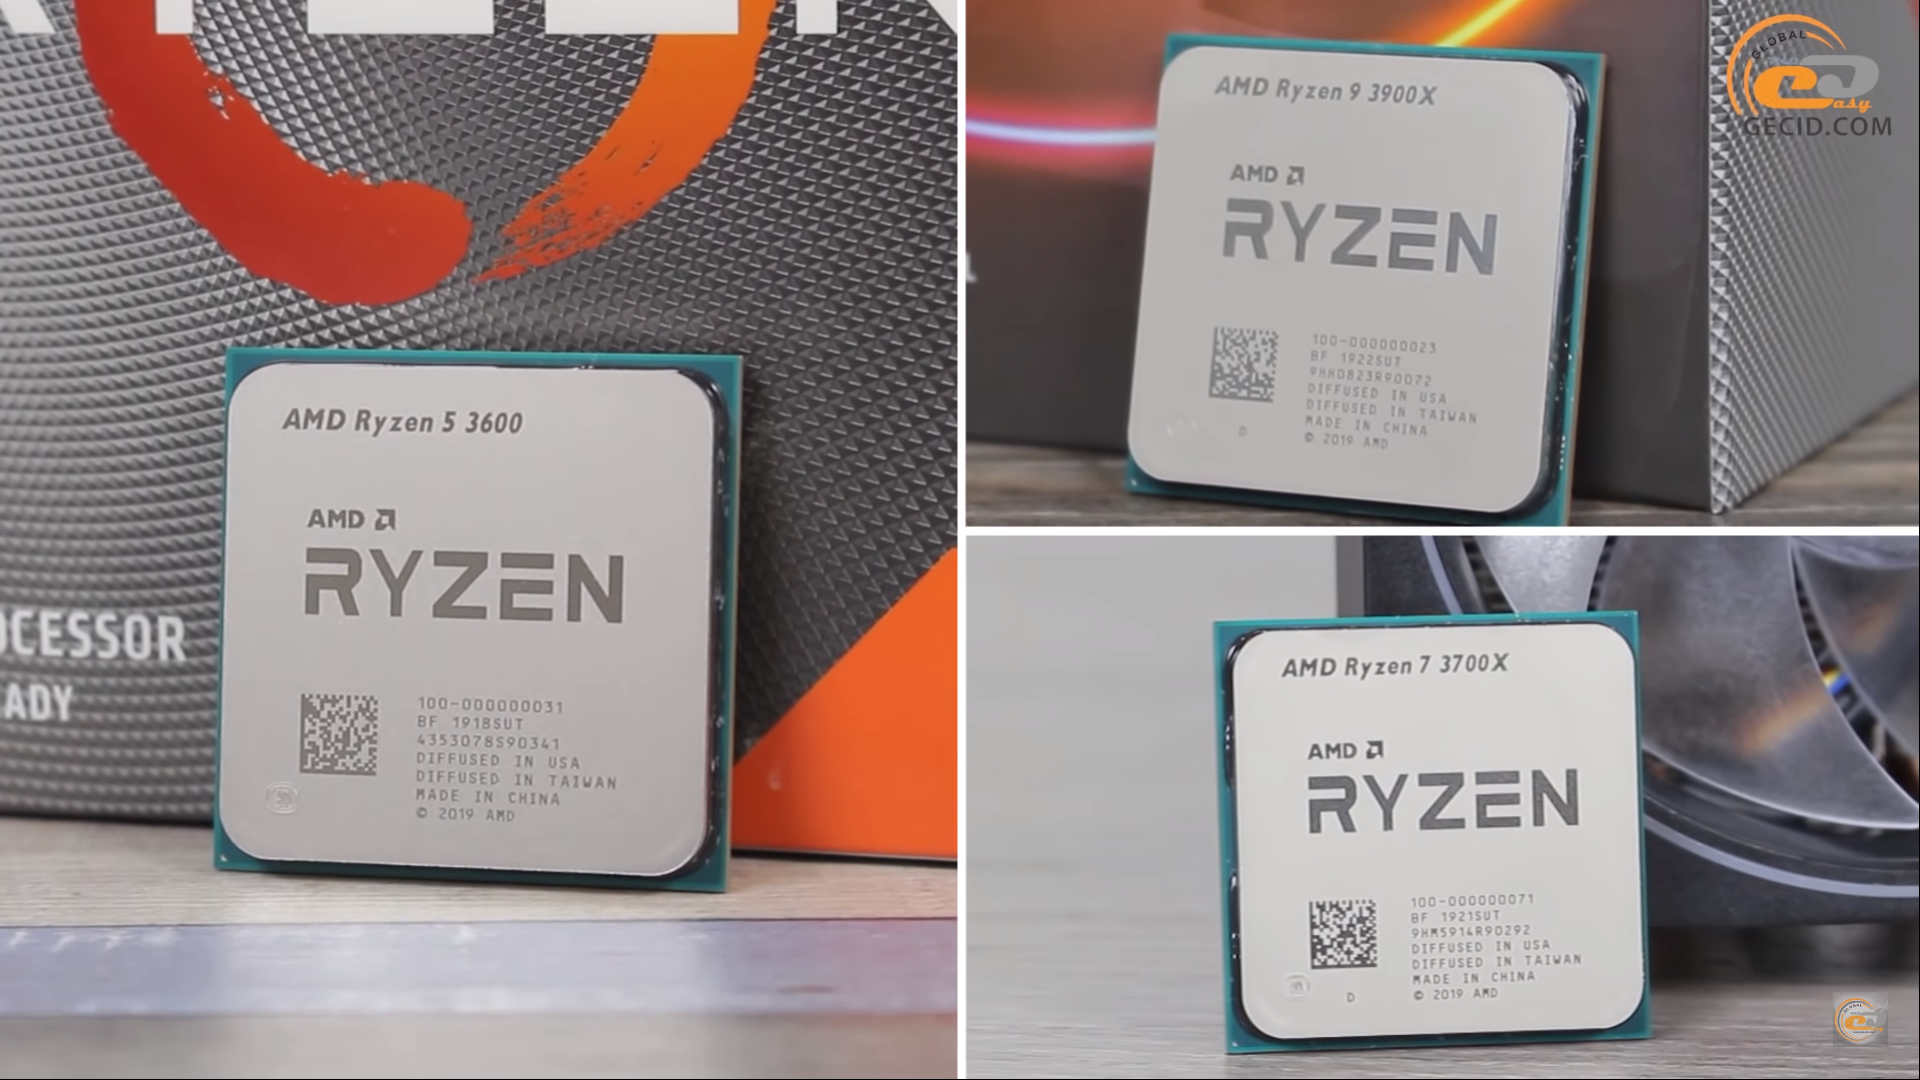 Amd ryzen 7 3700x купить. AMD Ryzen 5 3600. Процессор AMD Ryzen 5 3600, (100-100000031awof) Box. Ryzen 5 3600 АКБ. АМД райзен 5 1600ч.